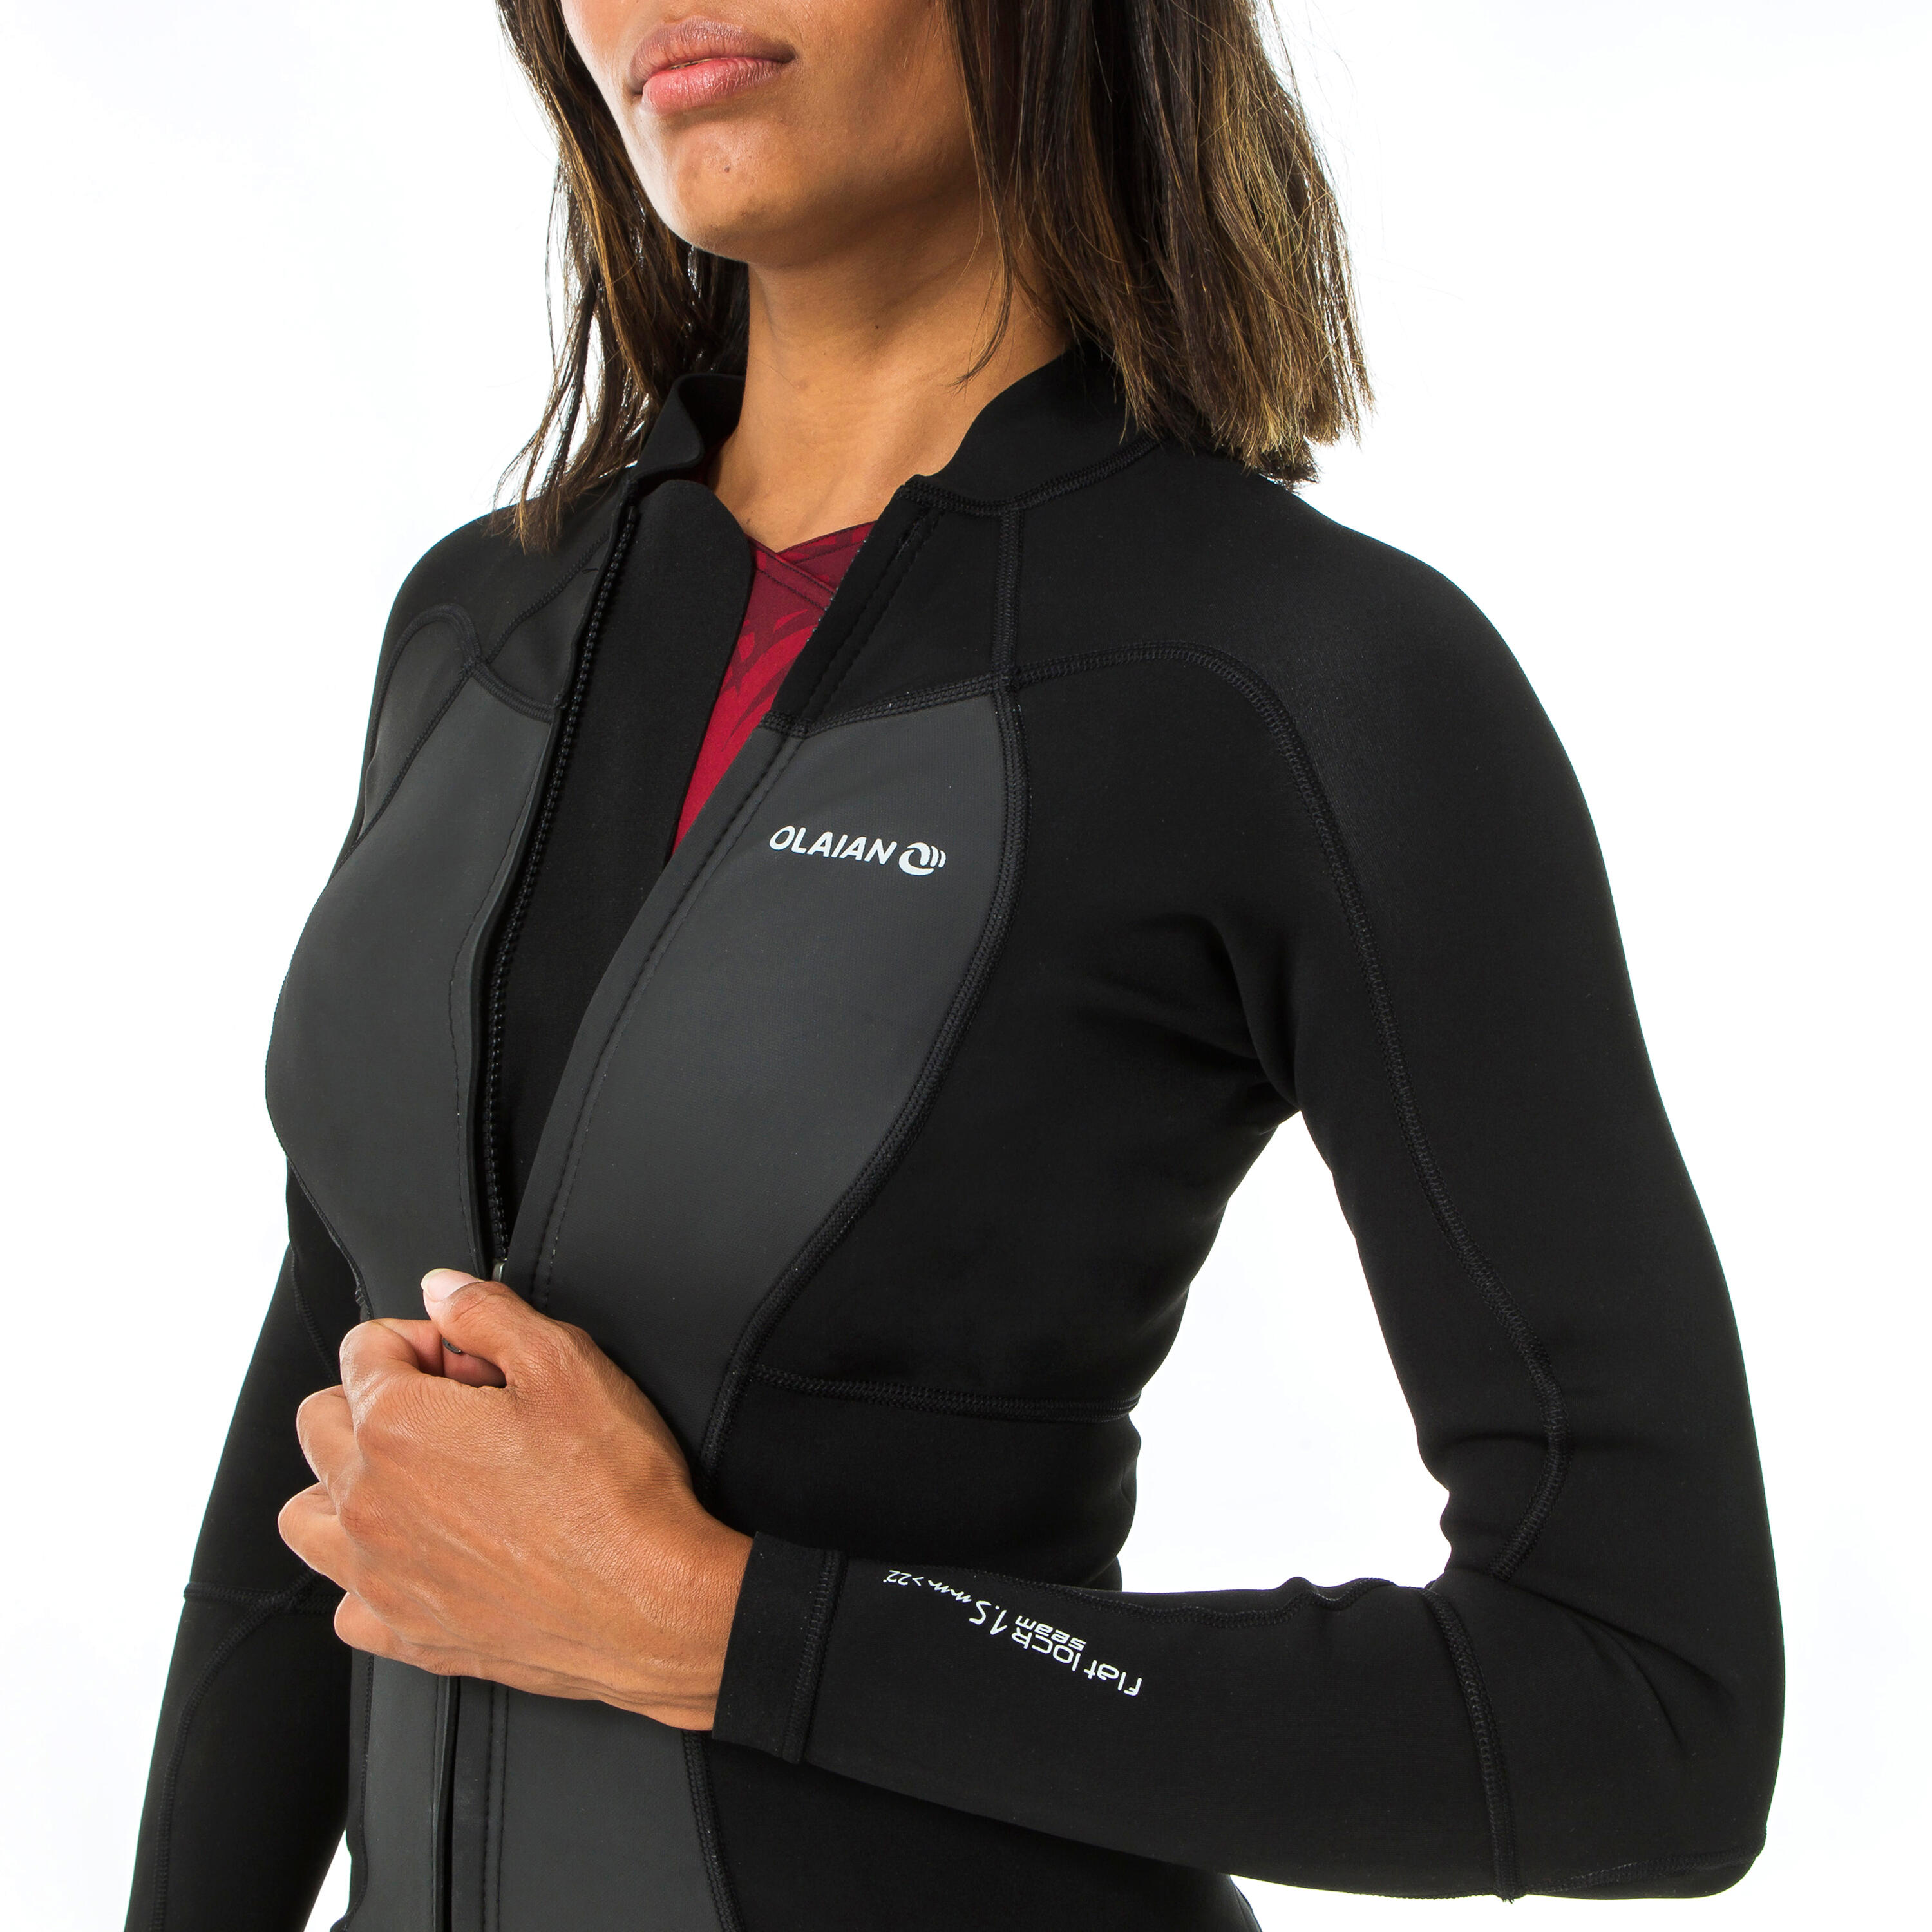 Women’s advanced neoprene longjane wetsuit 1.5 mm extra-soft with no zip 13/17